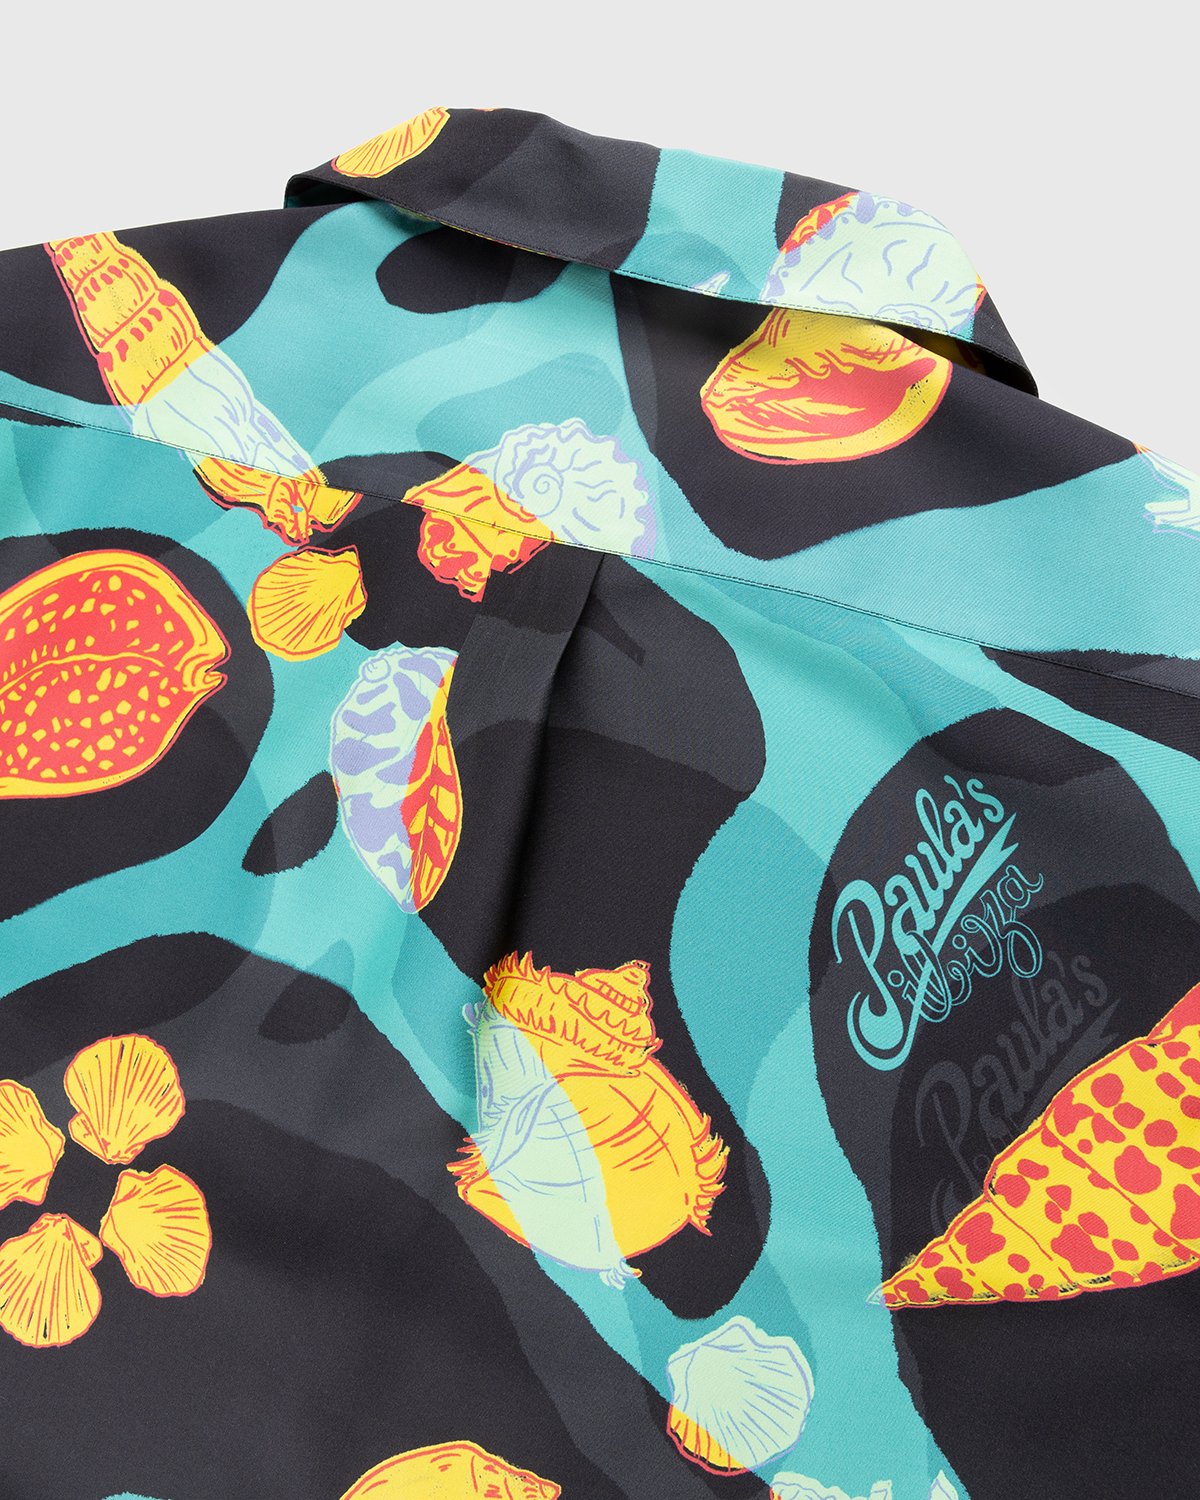 Loewe - Paula's Ibiza Shell Print Bowling Shirt Black - Clothing - Multi - Image 3